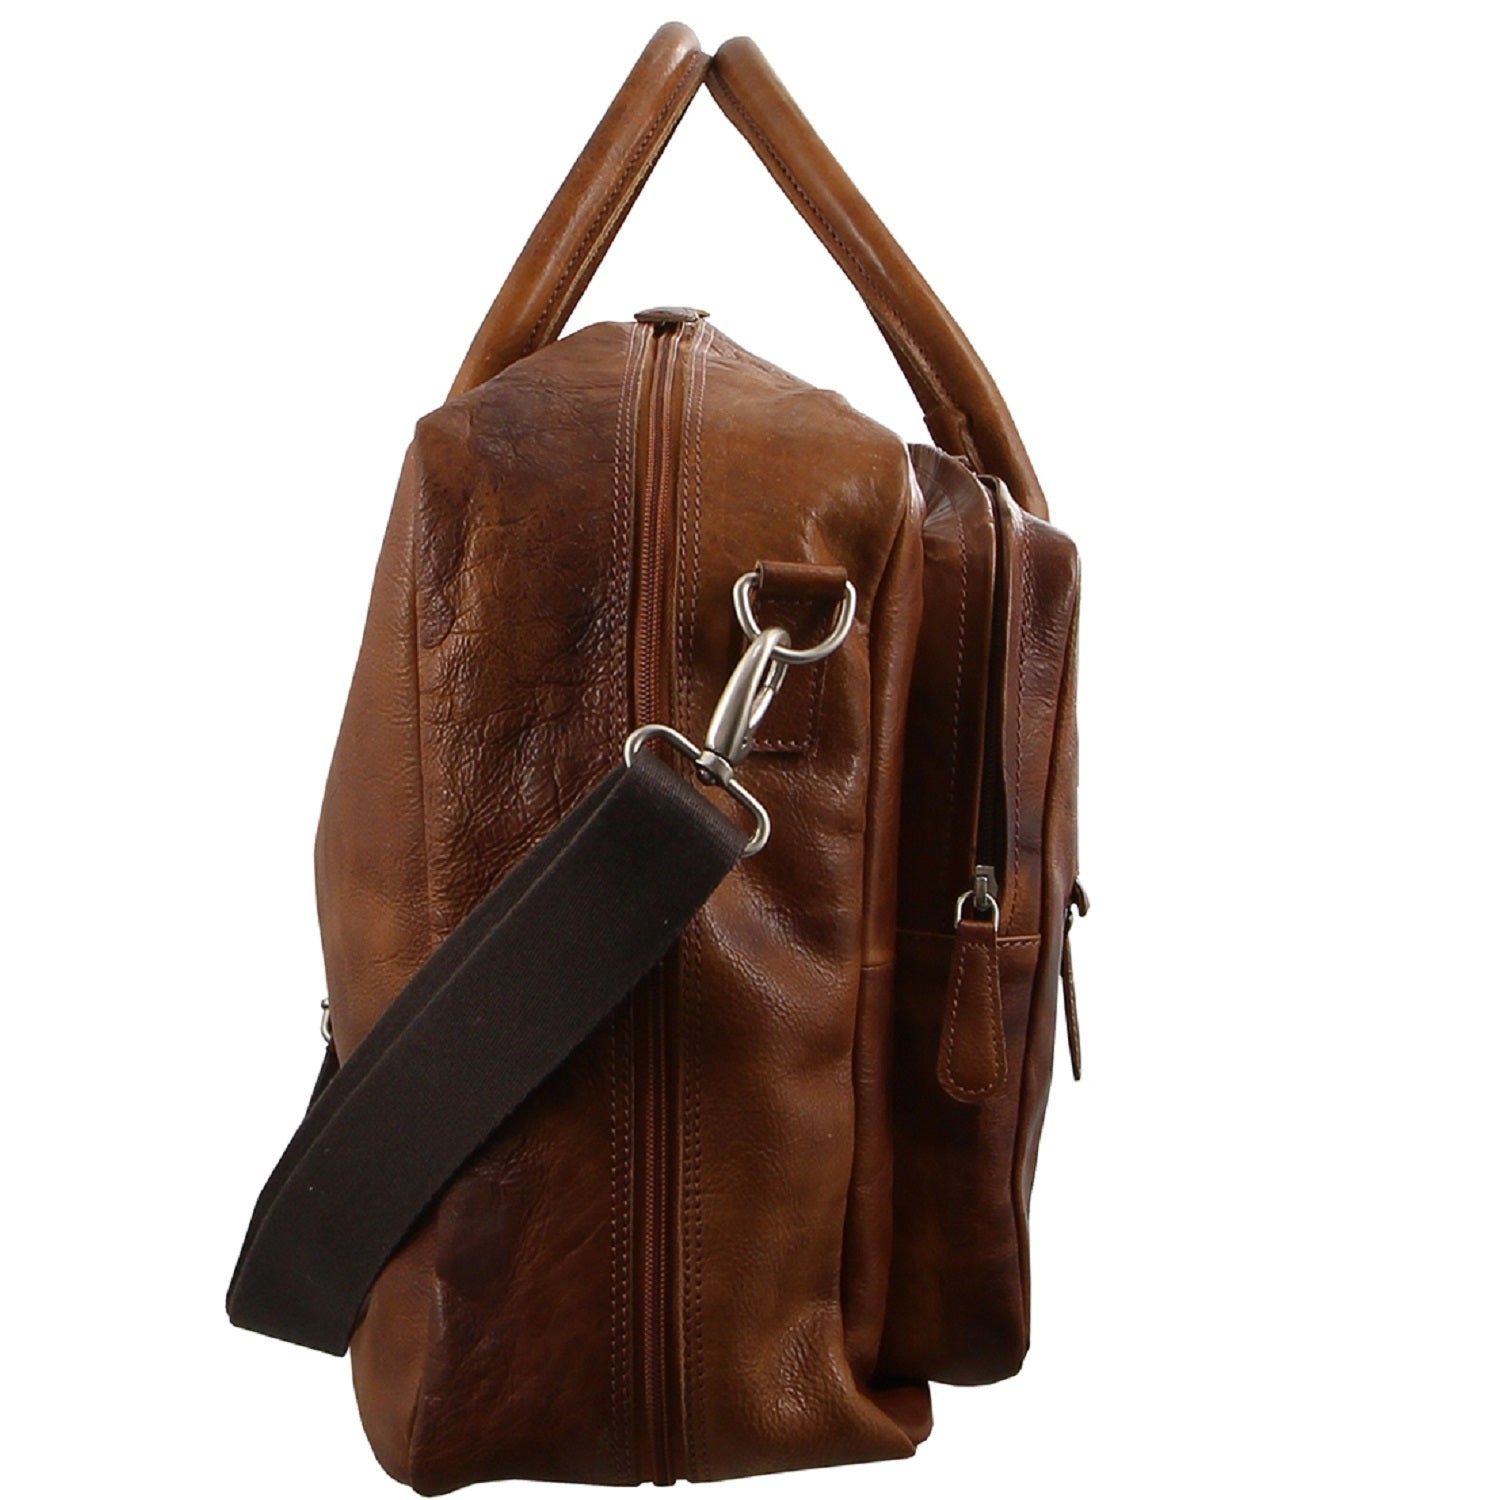 Pierre Cardin Rustic Leather Business Bag in Cognac